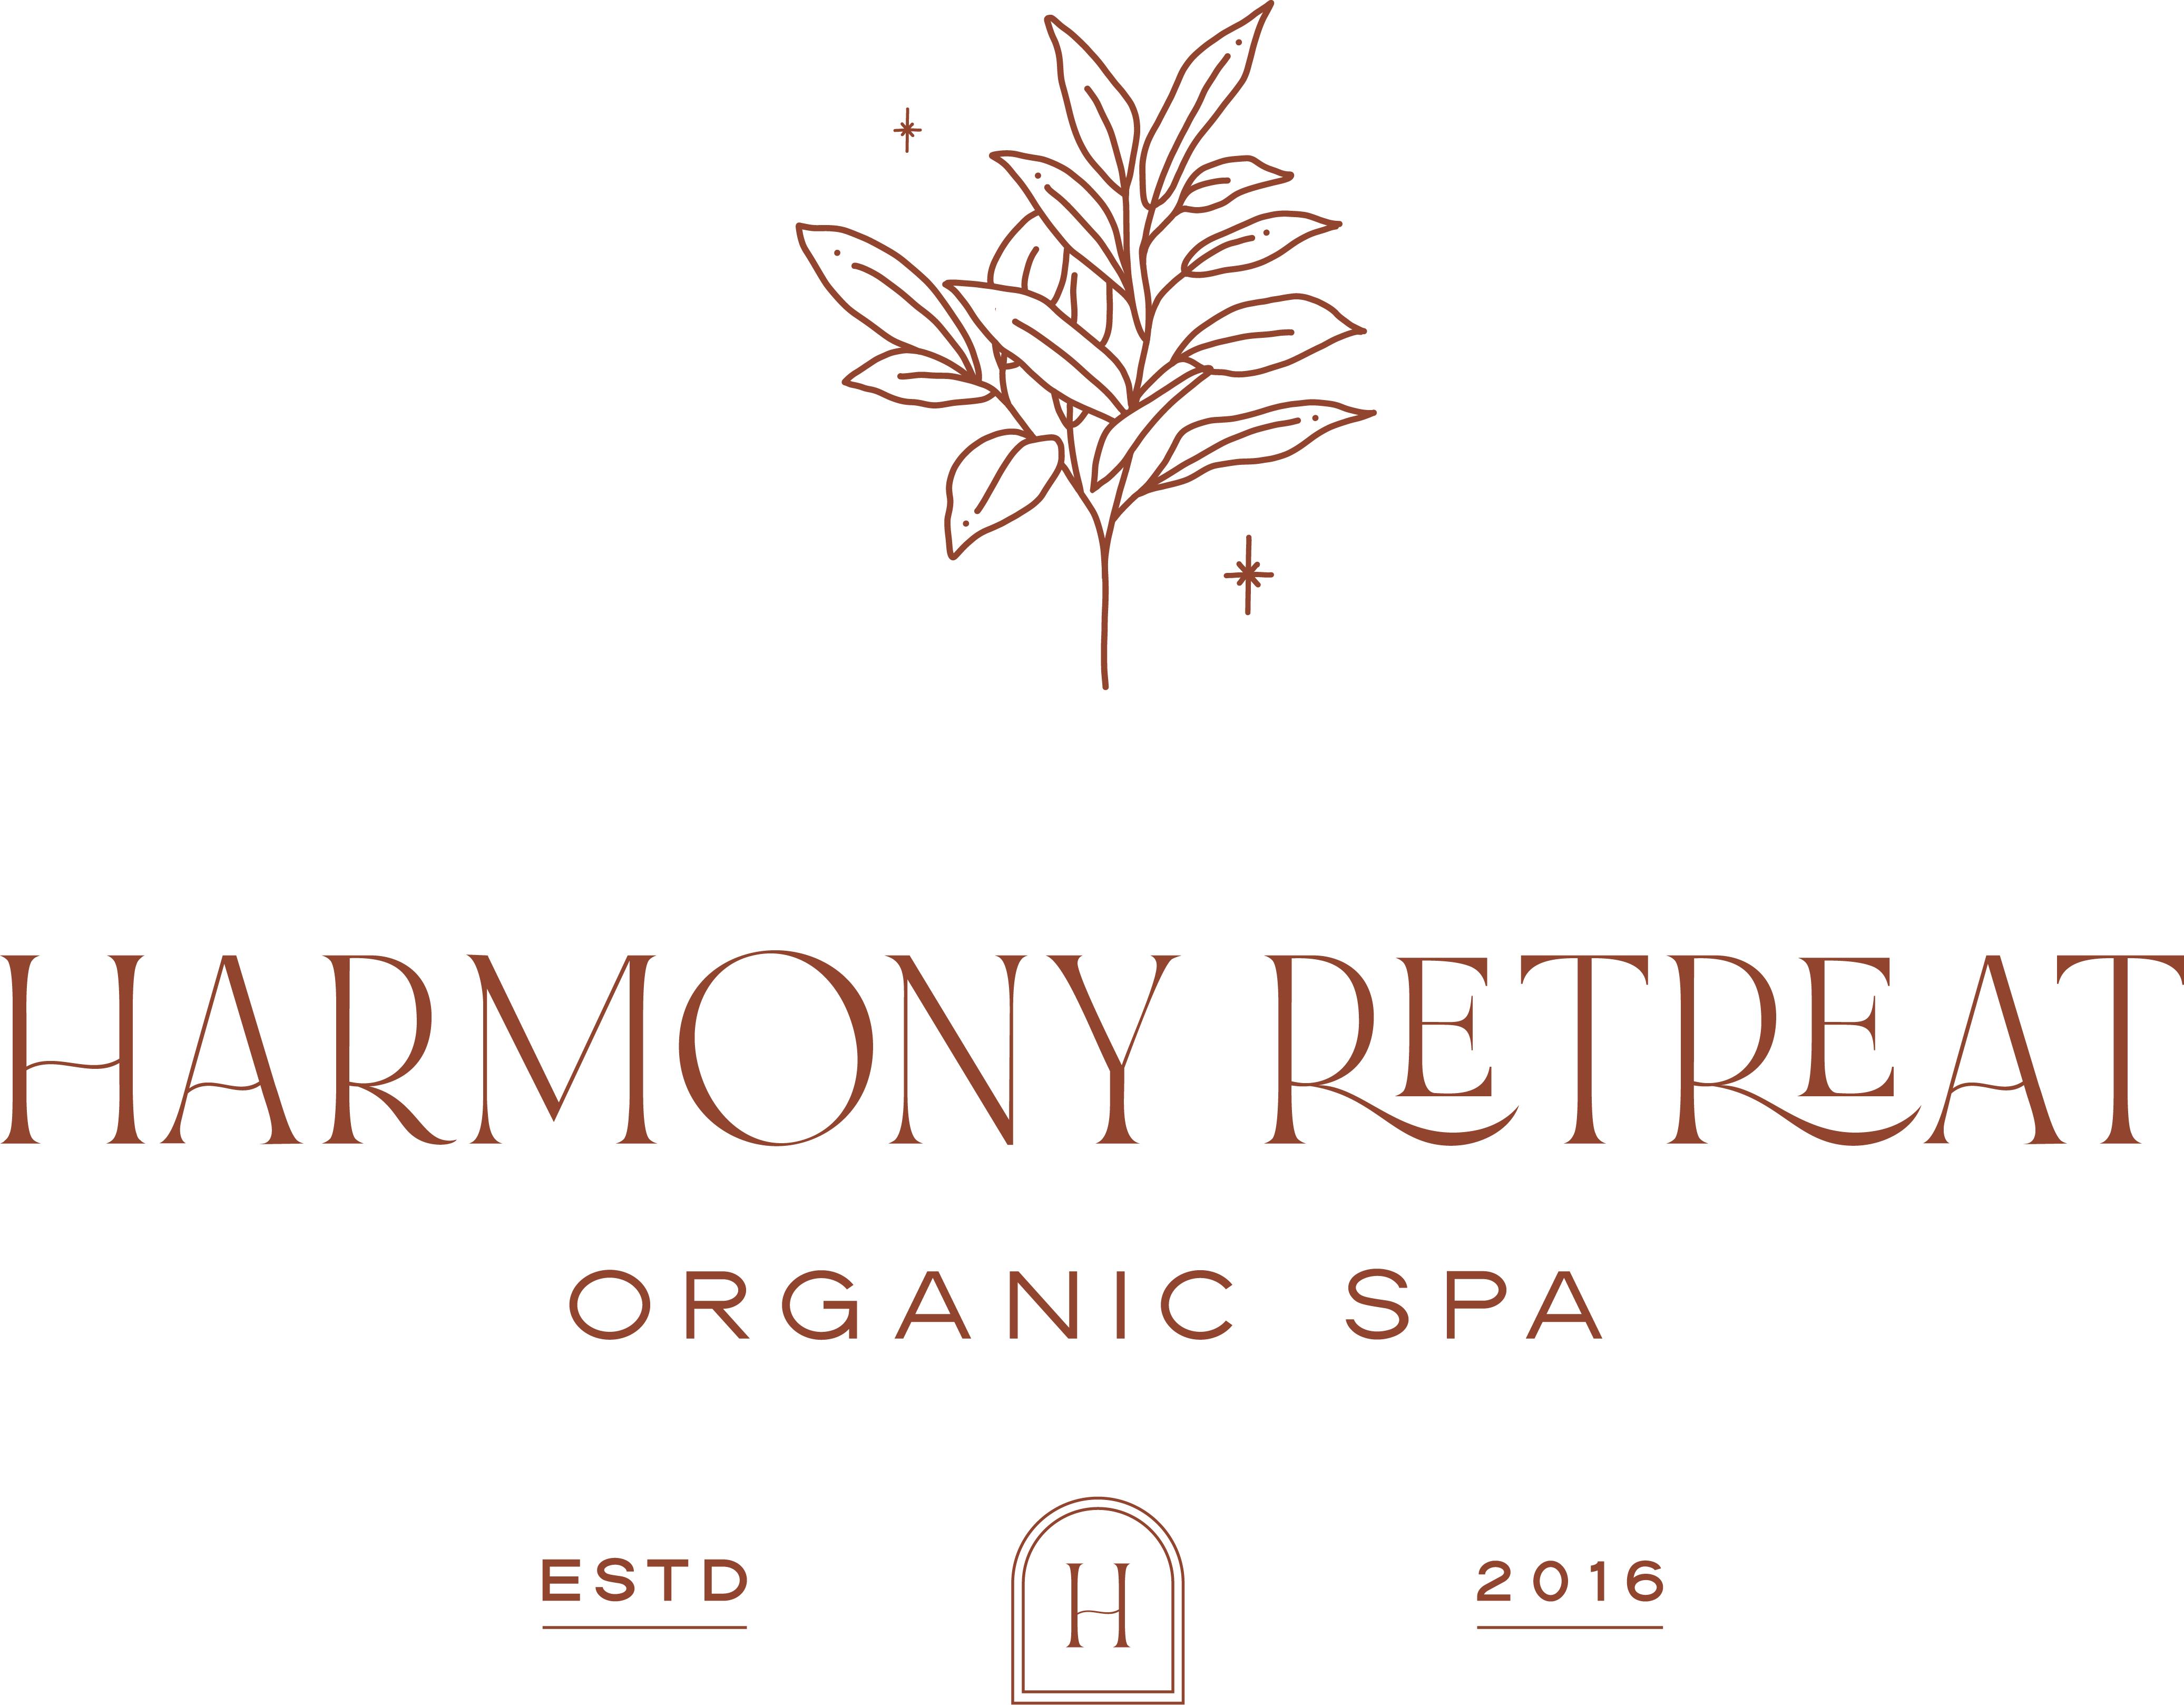 Harmony Retreat Organic Spa